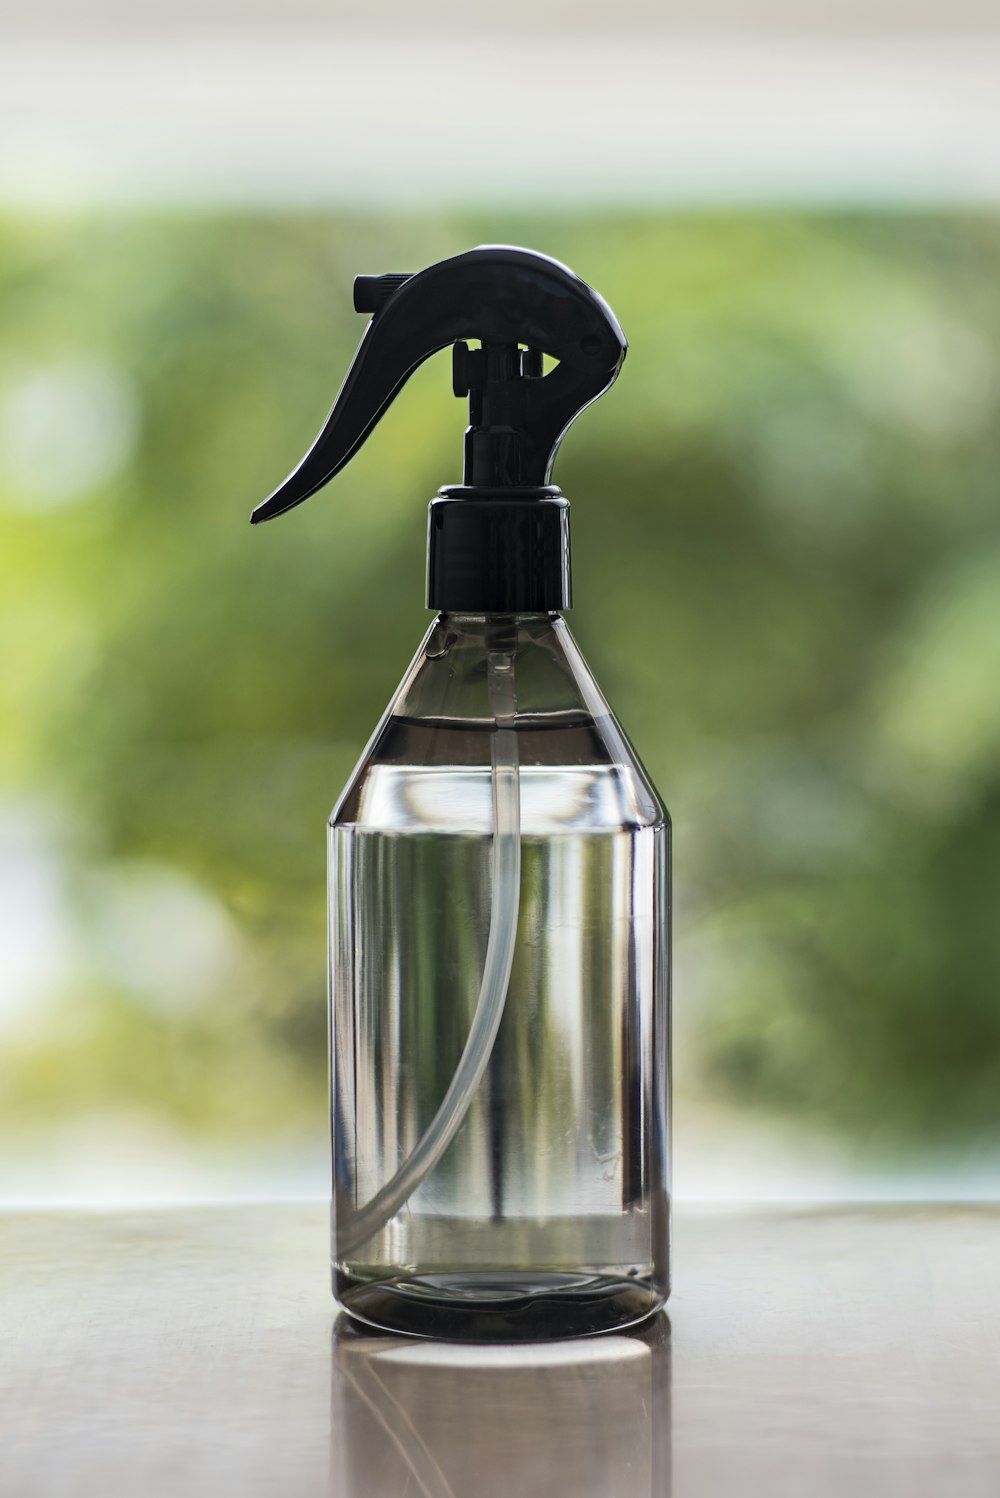 Spray Bottle Pictures  Download Free Images on Unsplash